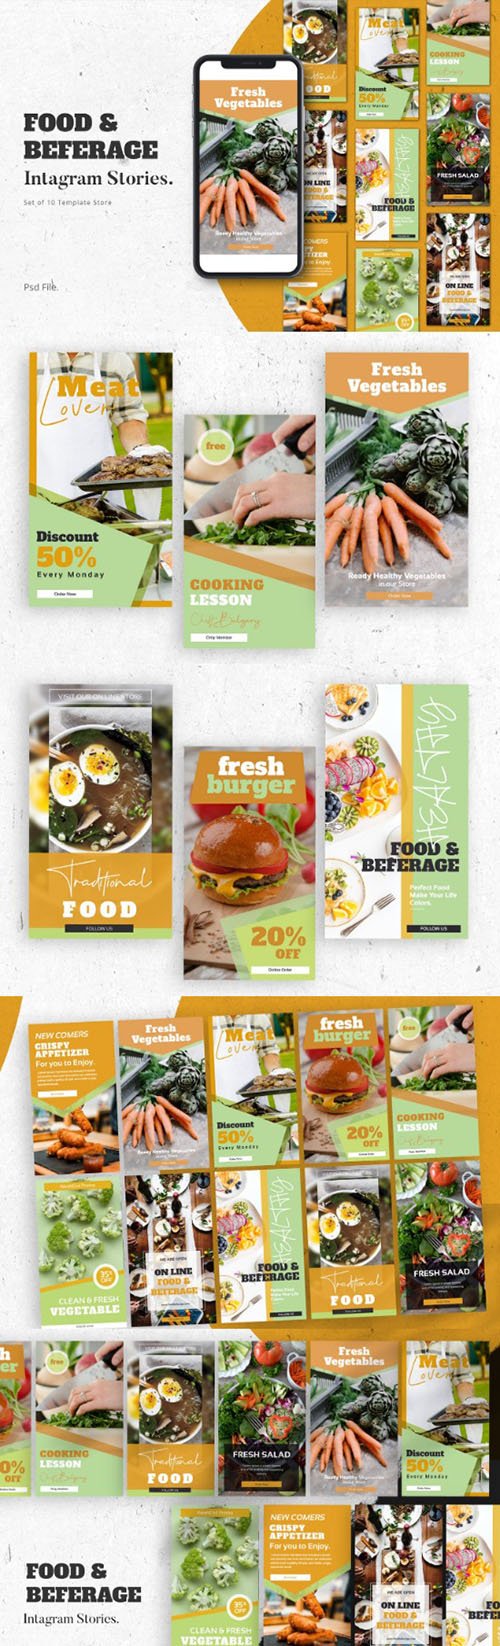 Food & Beferage Instagram Stories Template PSD